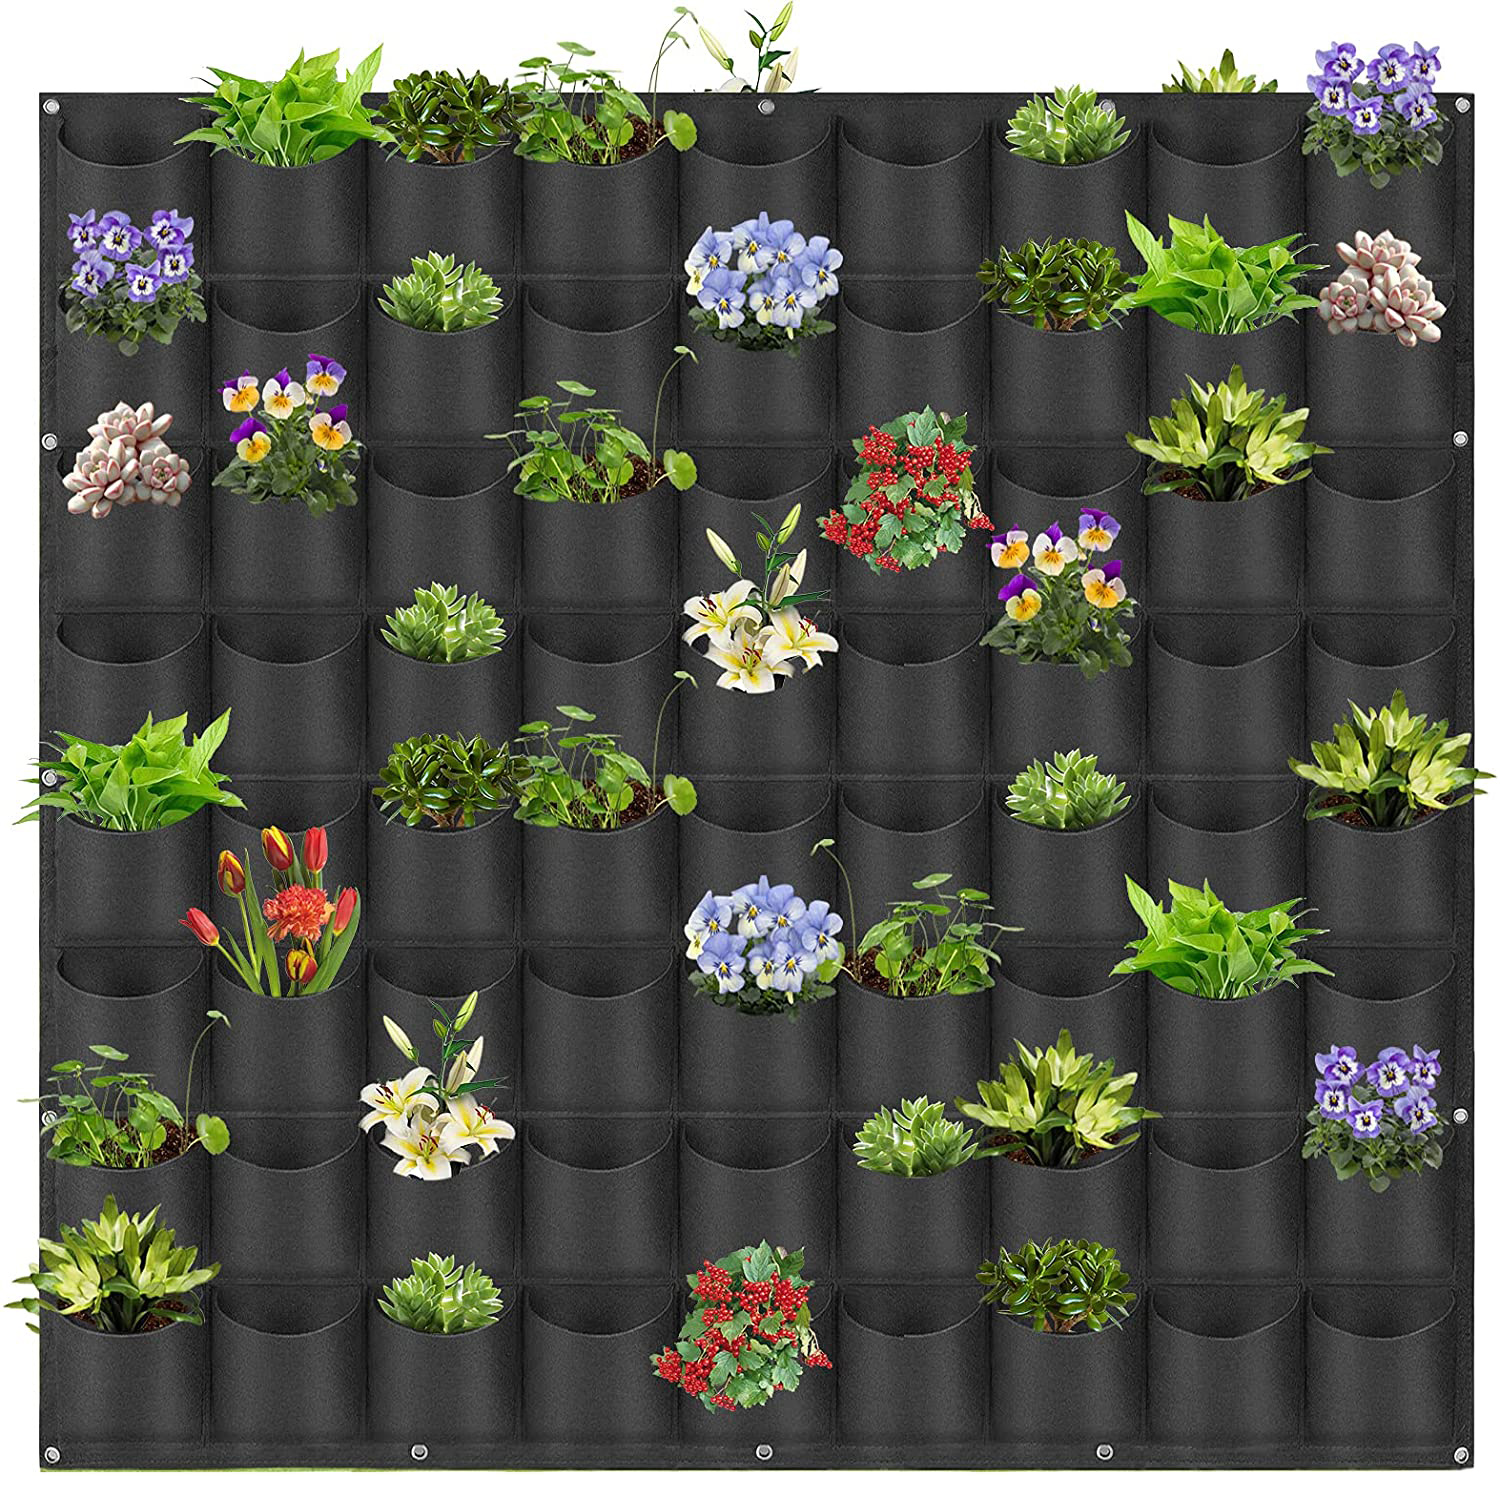 Wall Hanging Planter Planting Grow Bag Vertical Garden Vegetable Flower – Black, 72 Pockets